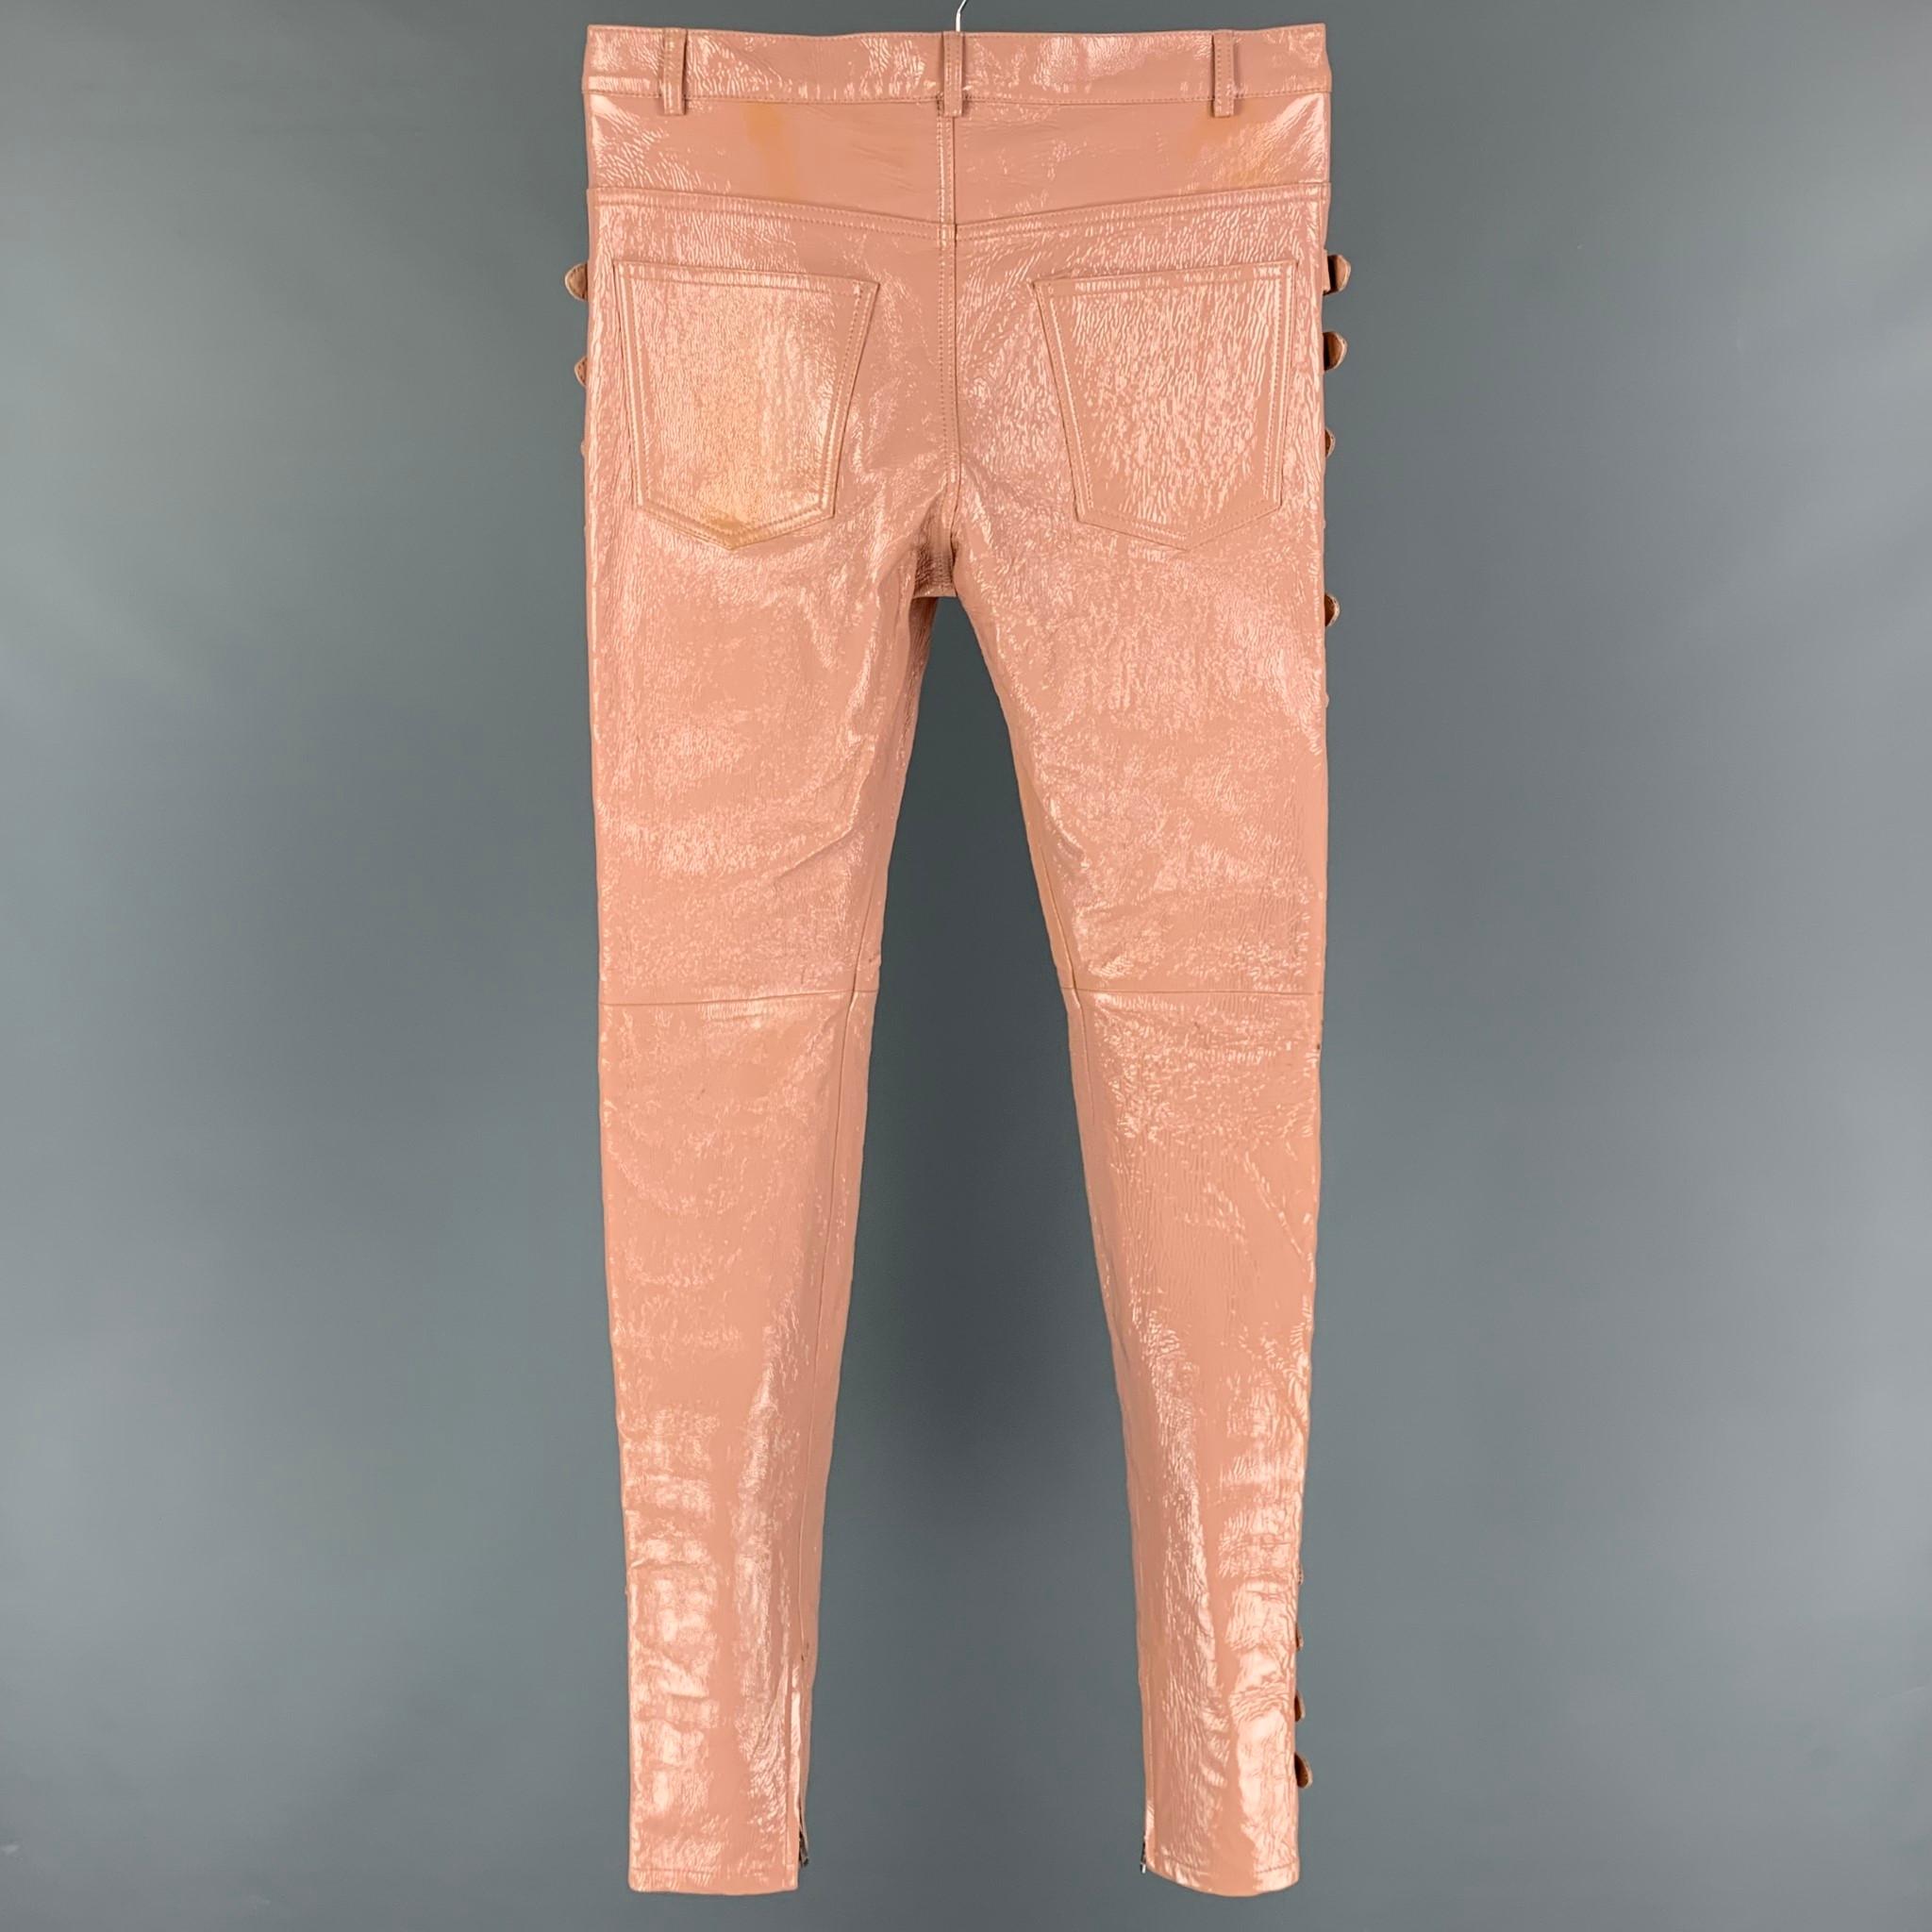 pink lace up pants